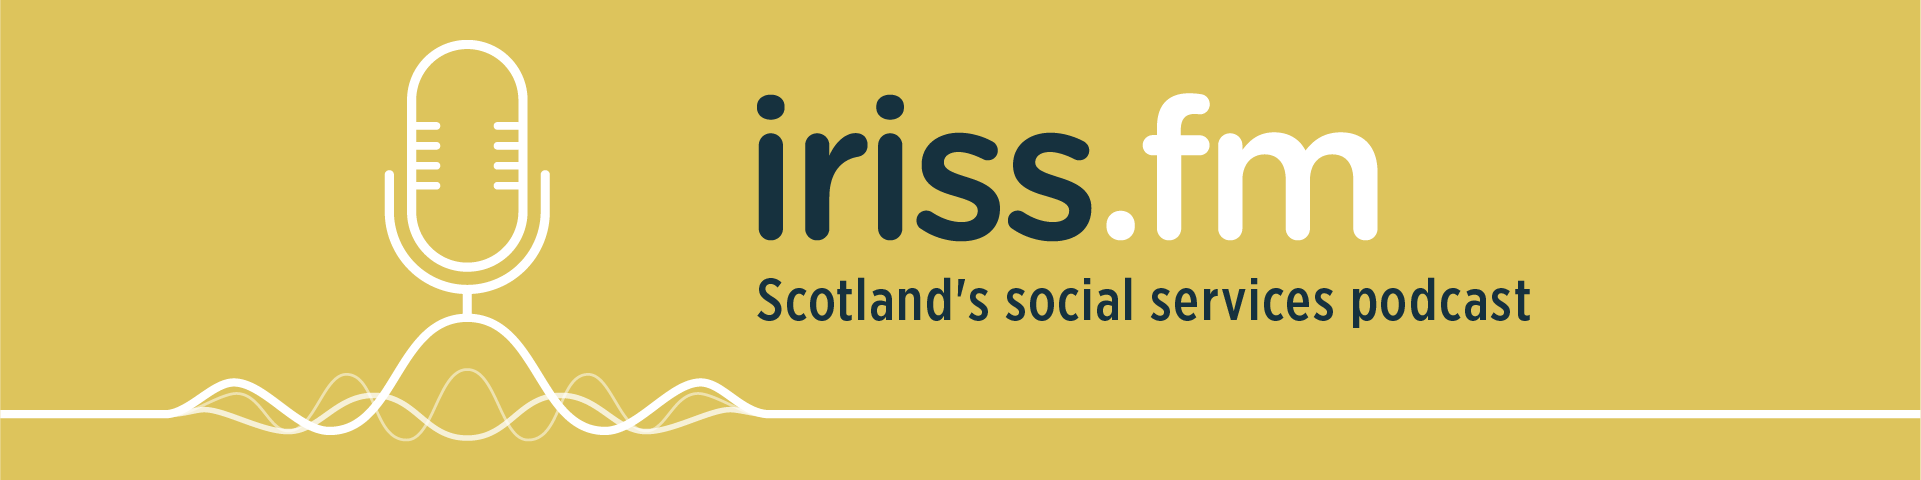 iris.fm podcast brand banner